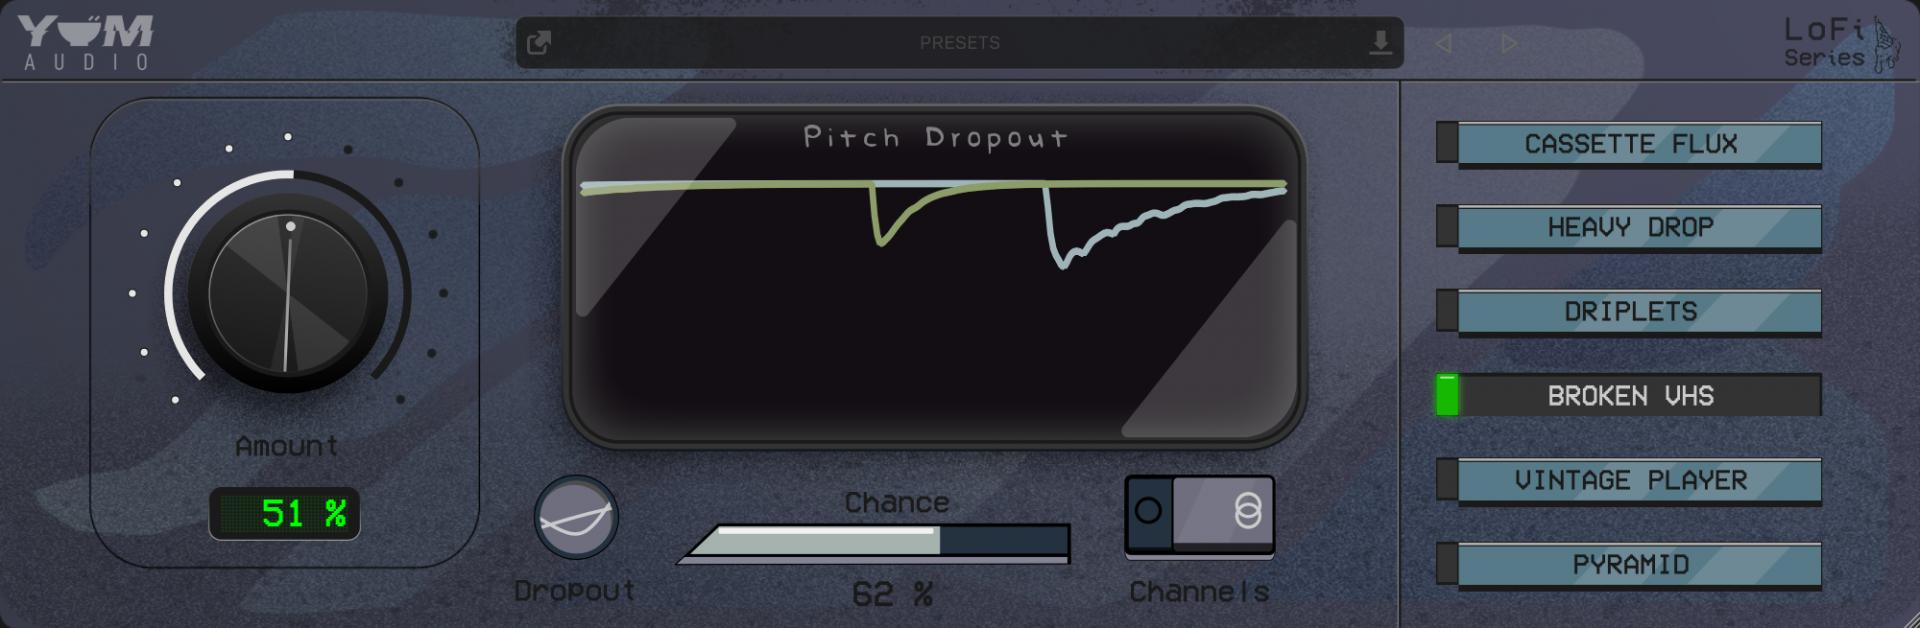 Pitch Dropout Yum Audio 2.png.jpg